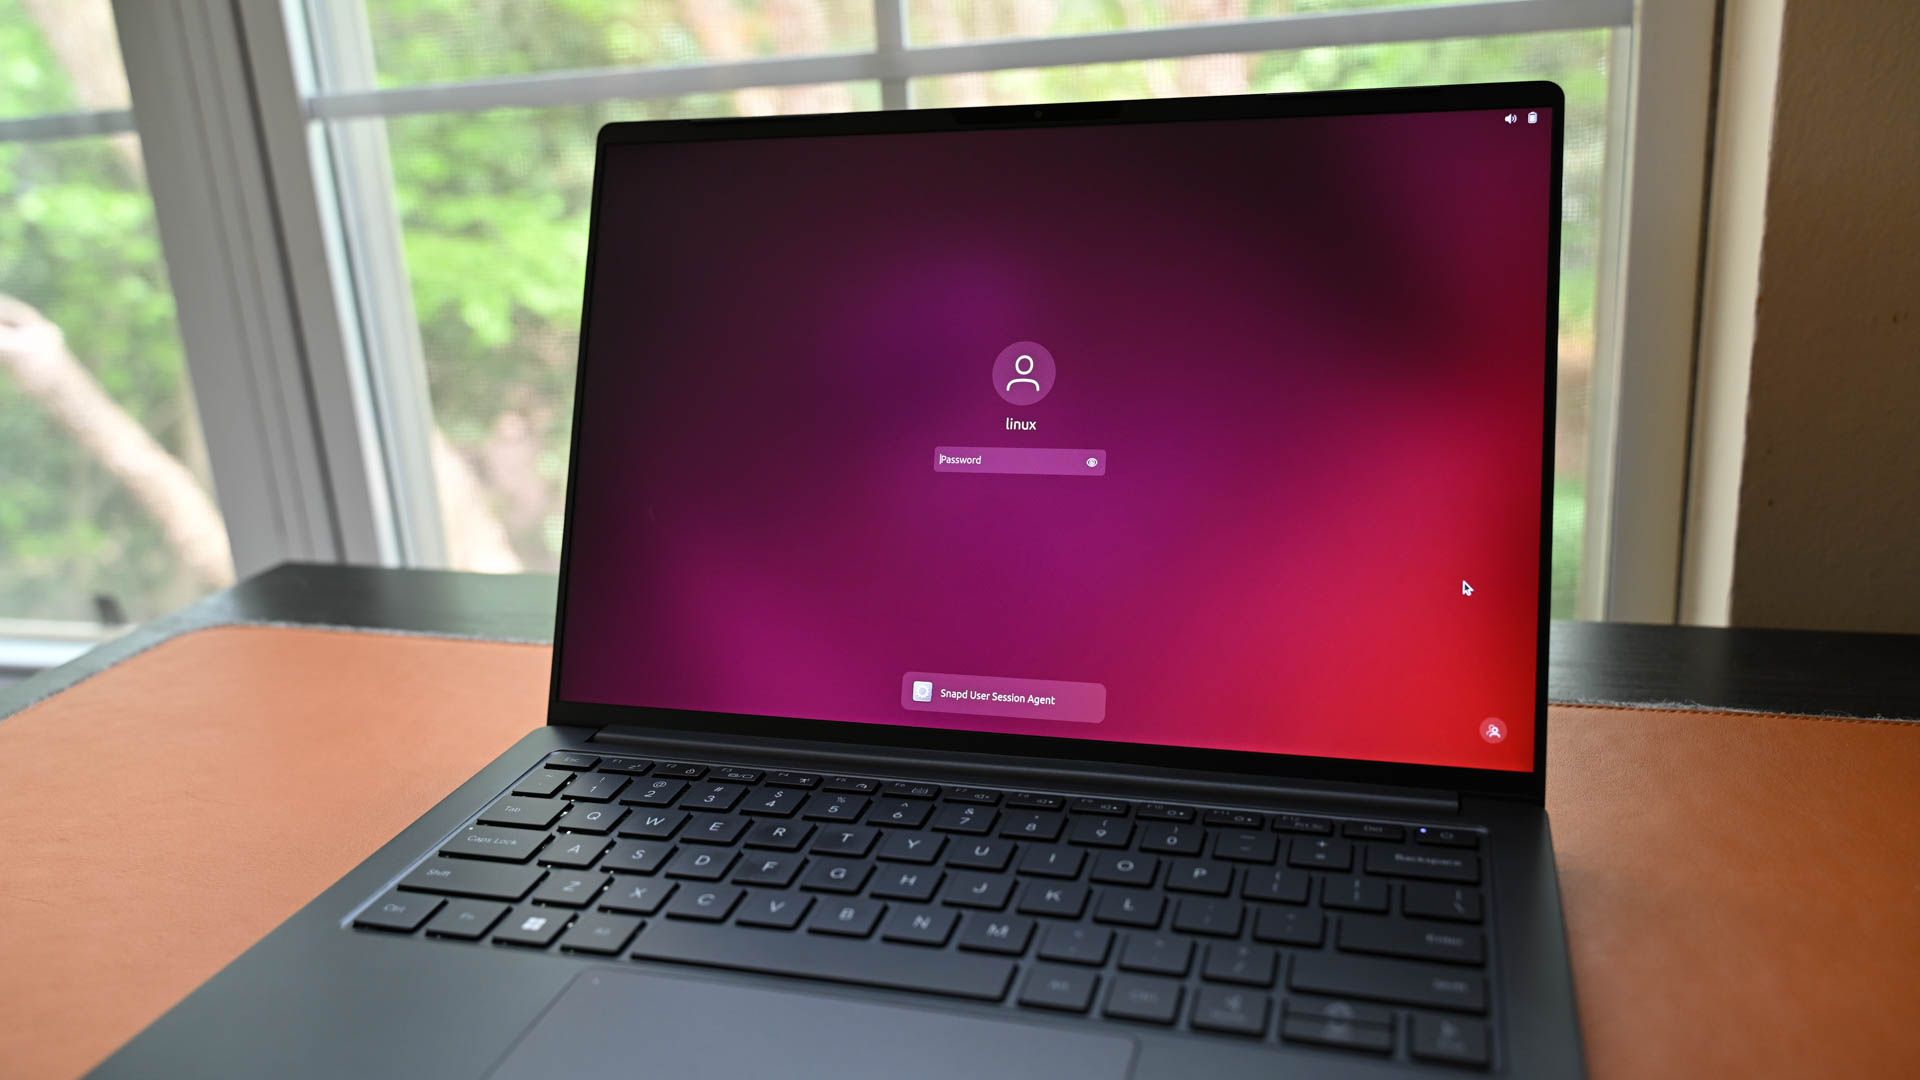 The login screen on a laptop running Ubuntu Linux. 